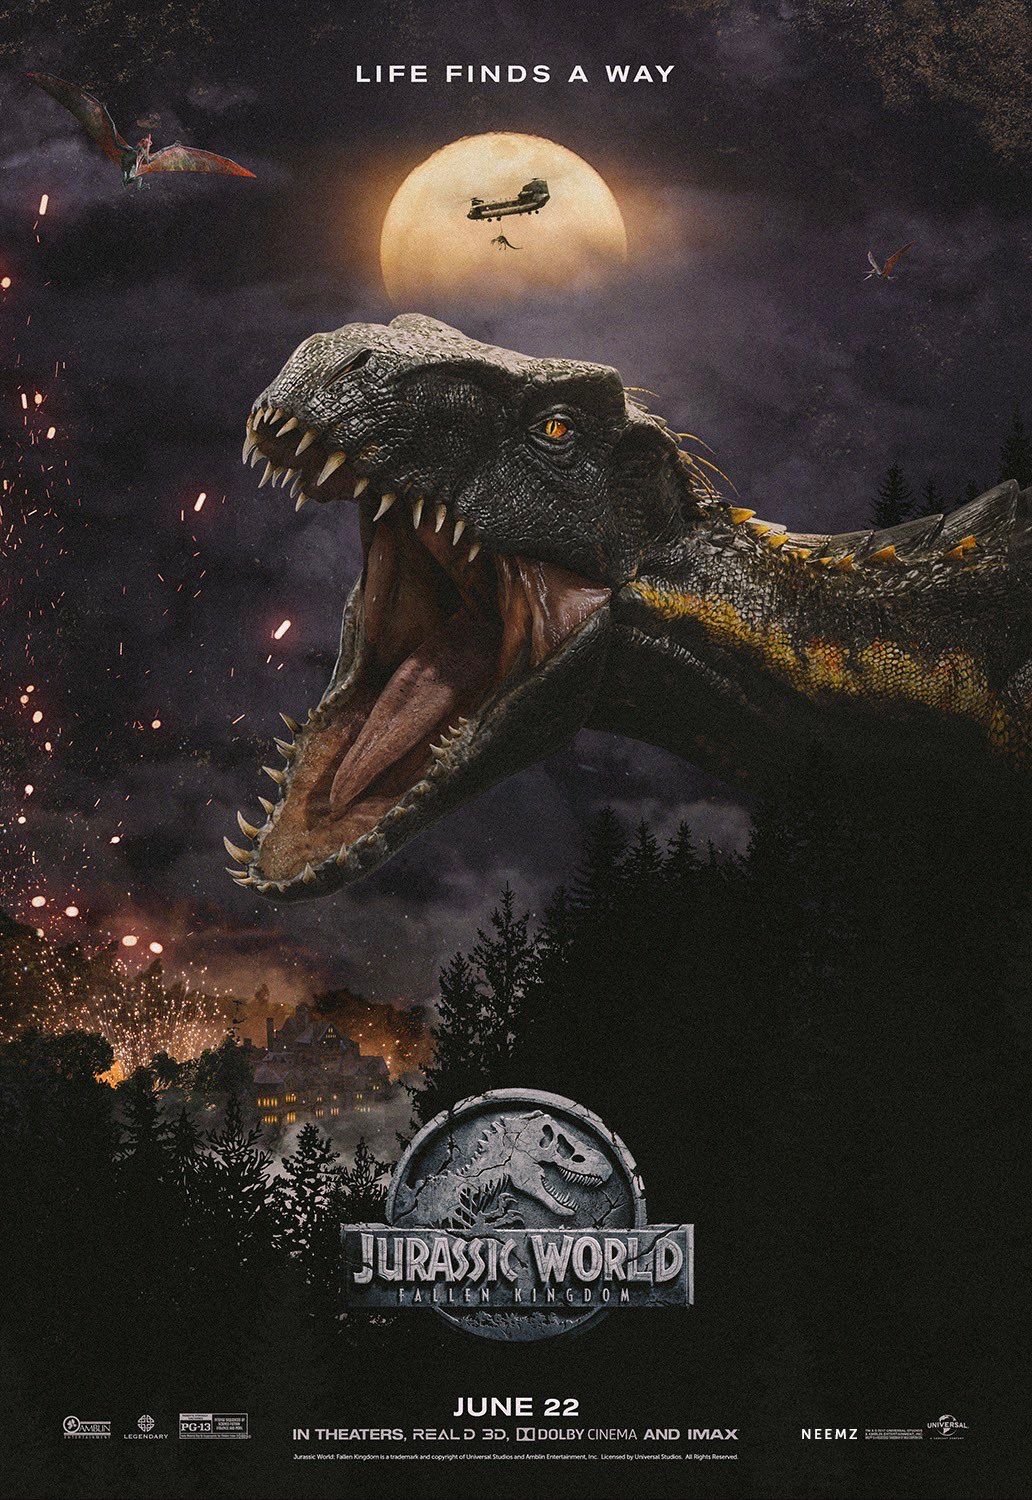 Jurassic World. Jurassic world wallpaper, Jurassic world dinosaurs, Jurassic world poster